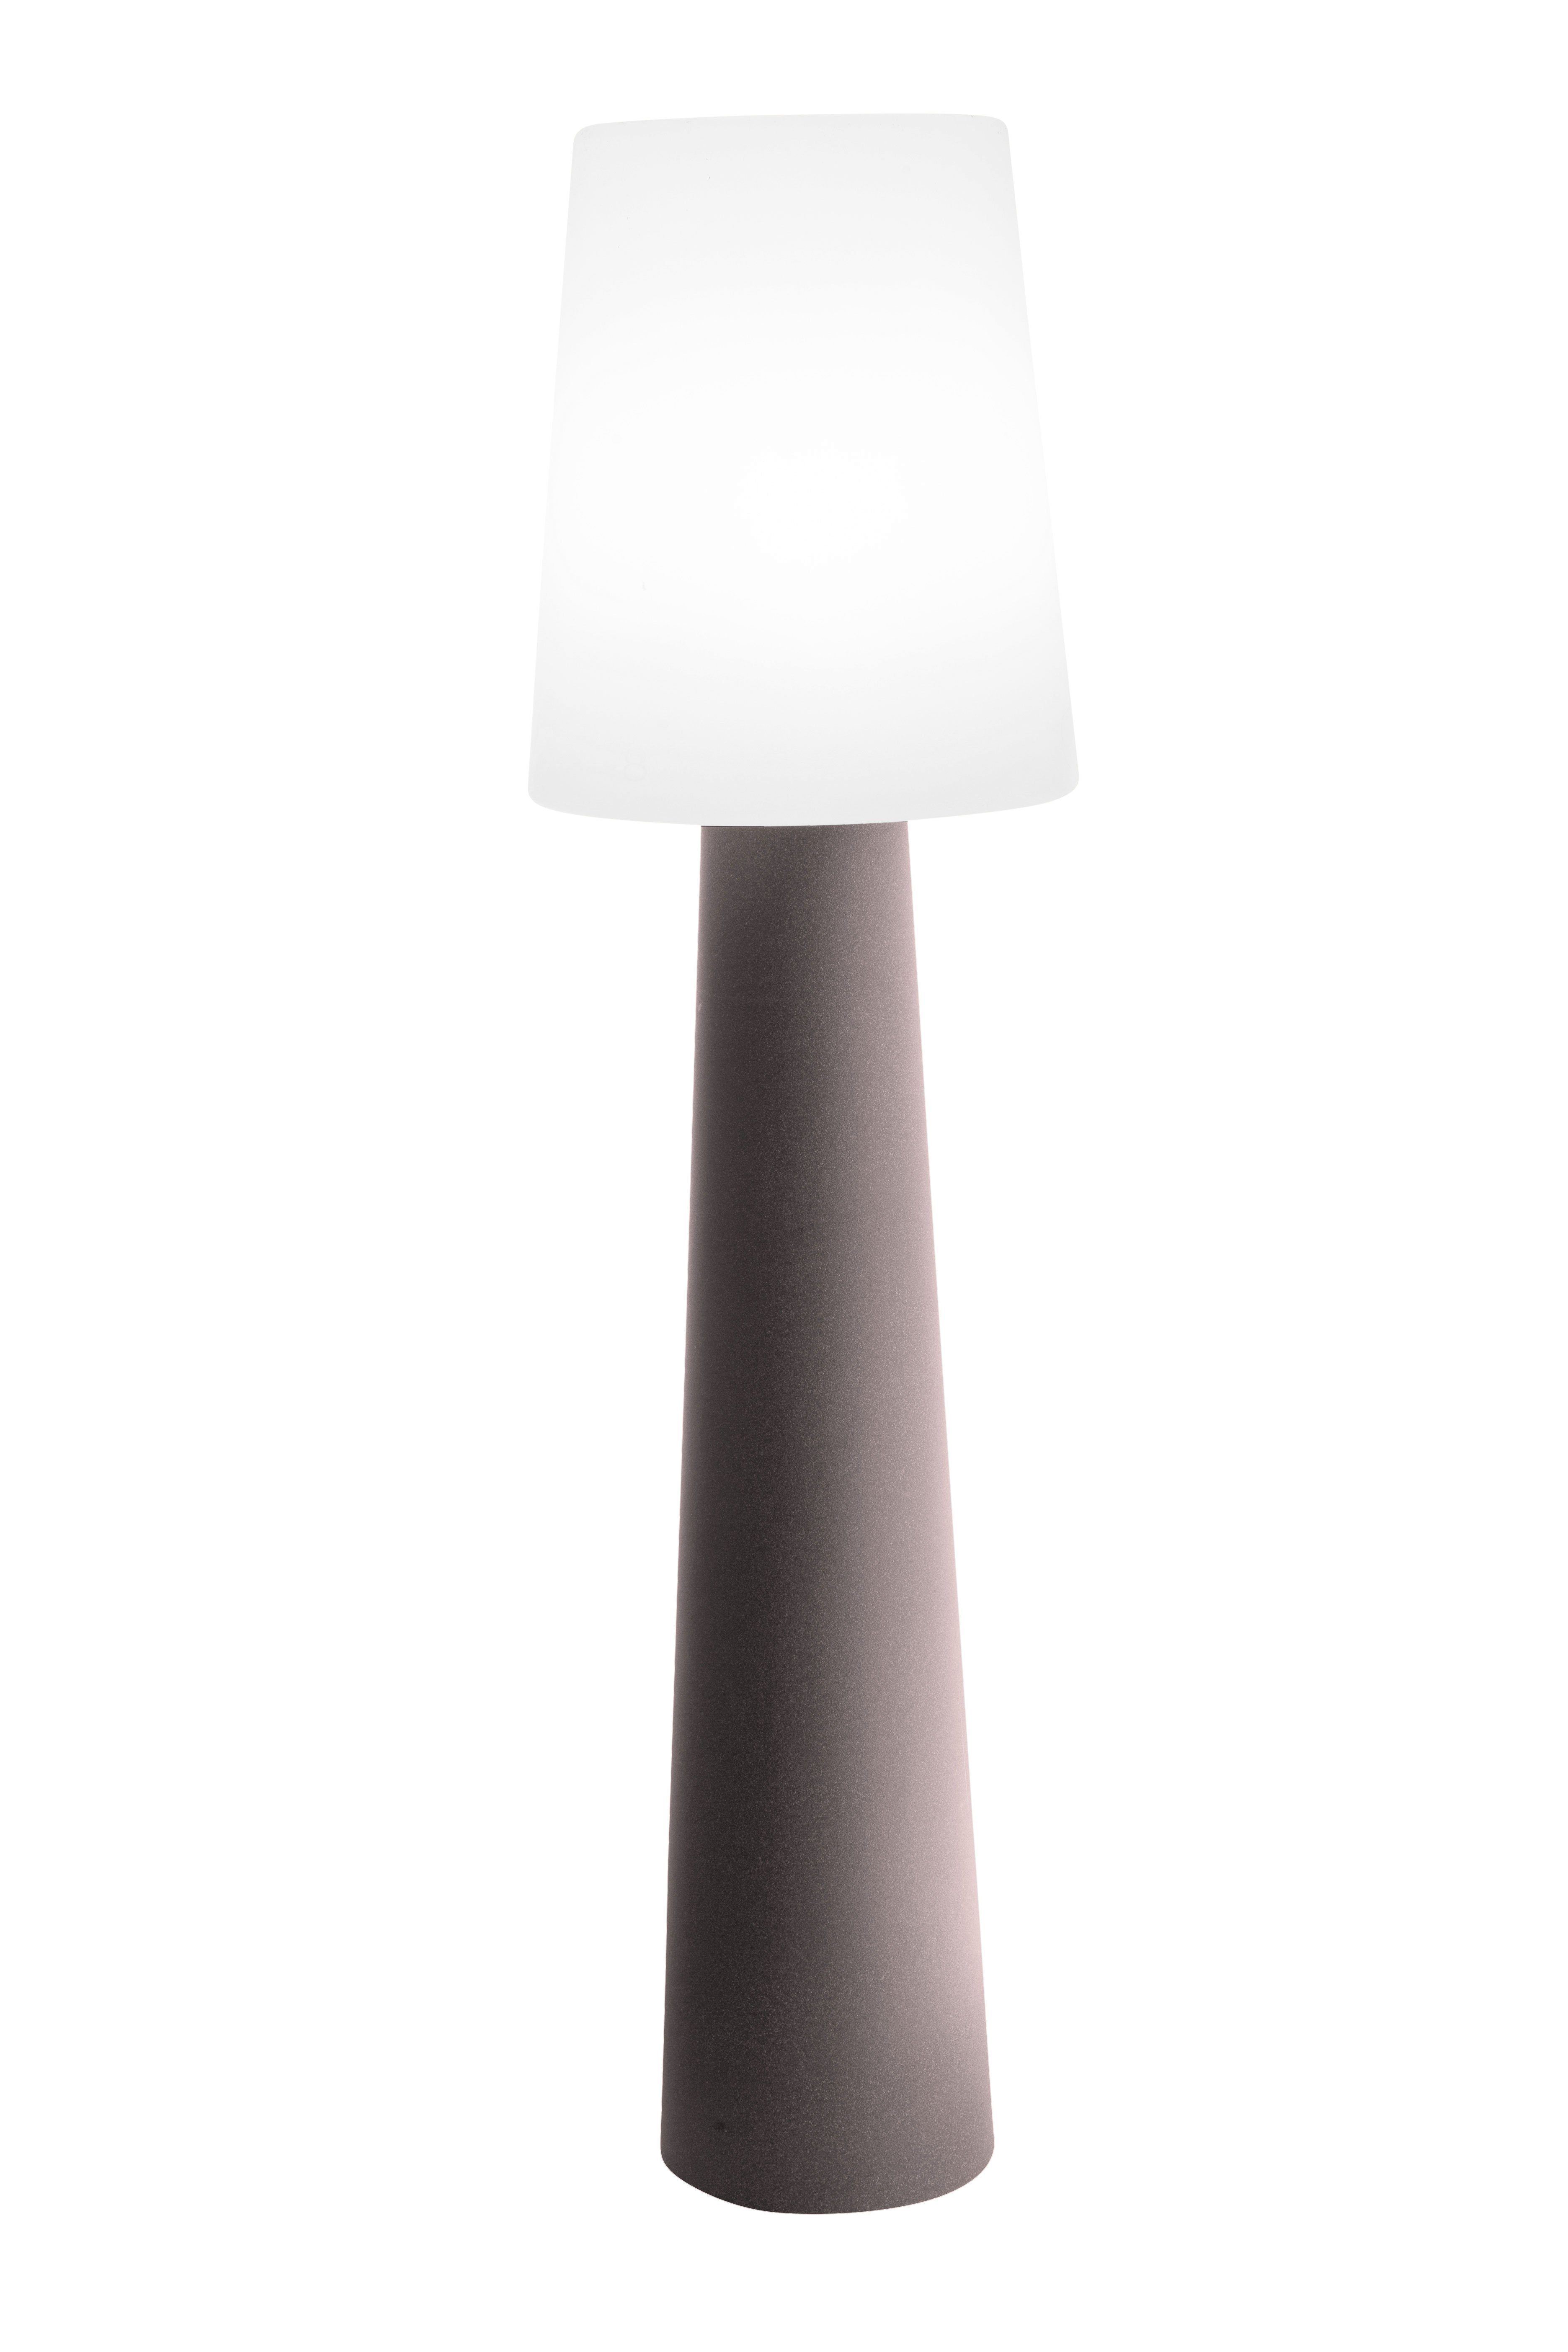 8 seasons design LED Stehlampe Shining No. 1, LED WW, LED wechselbar, warmweiß, 160 cm taupe für In- und Outdoor